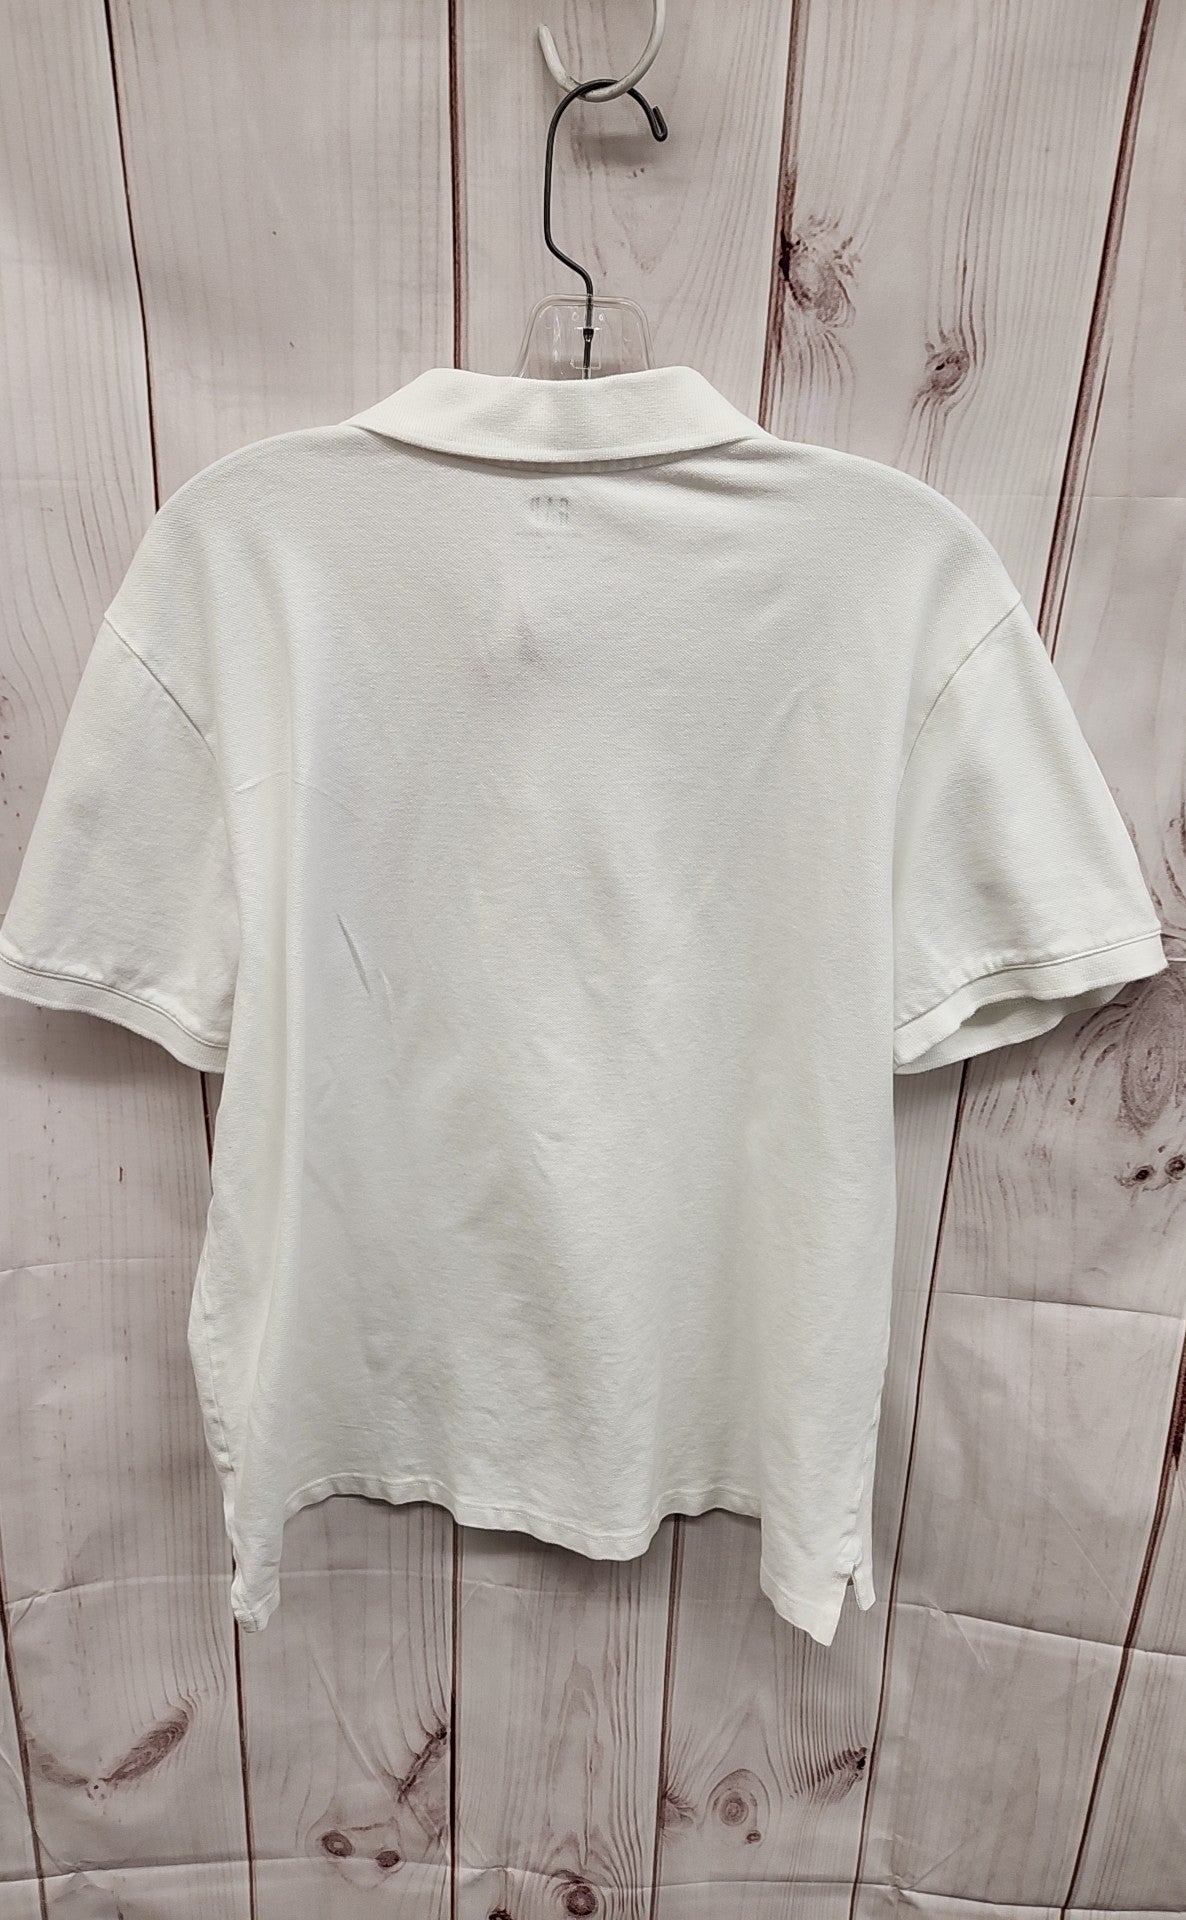 Gap Men's Size L White Shirt